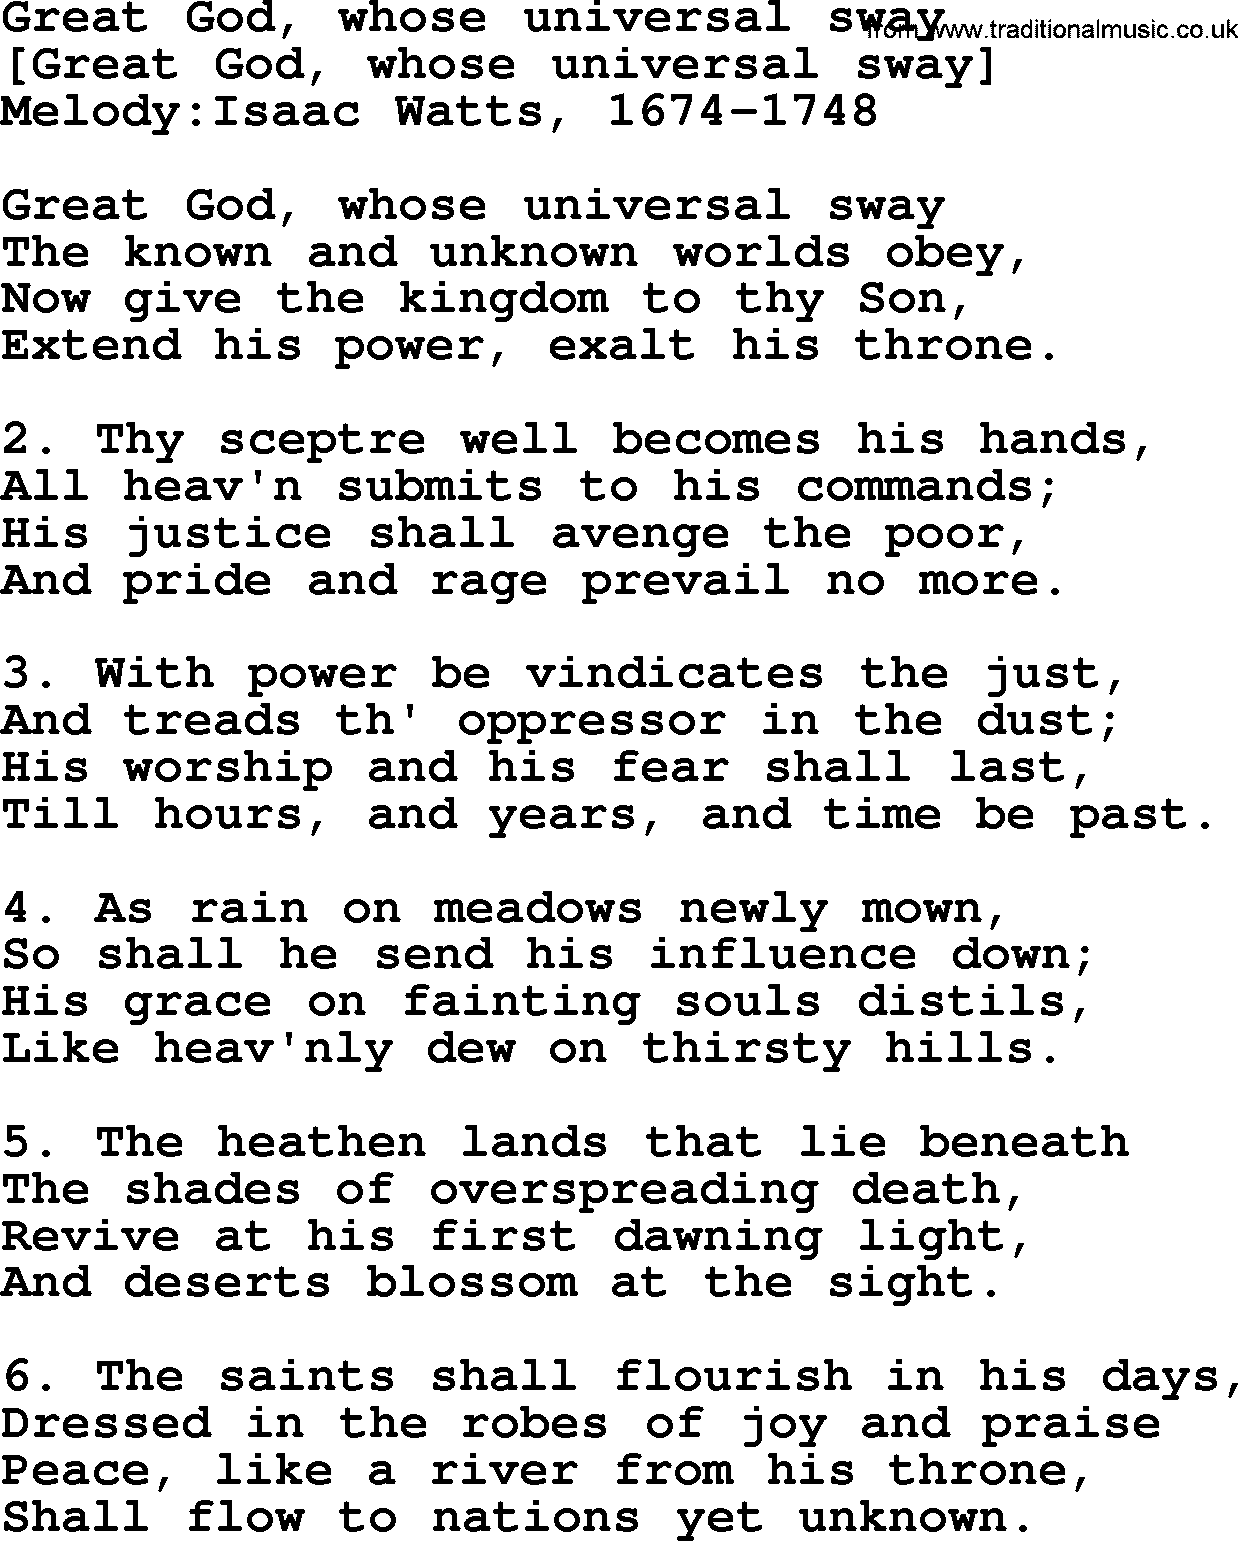 Old English Song: Great God, Whose Universal Sway lyrics